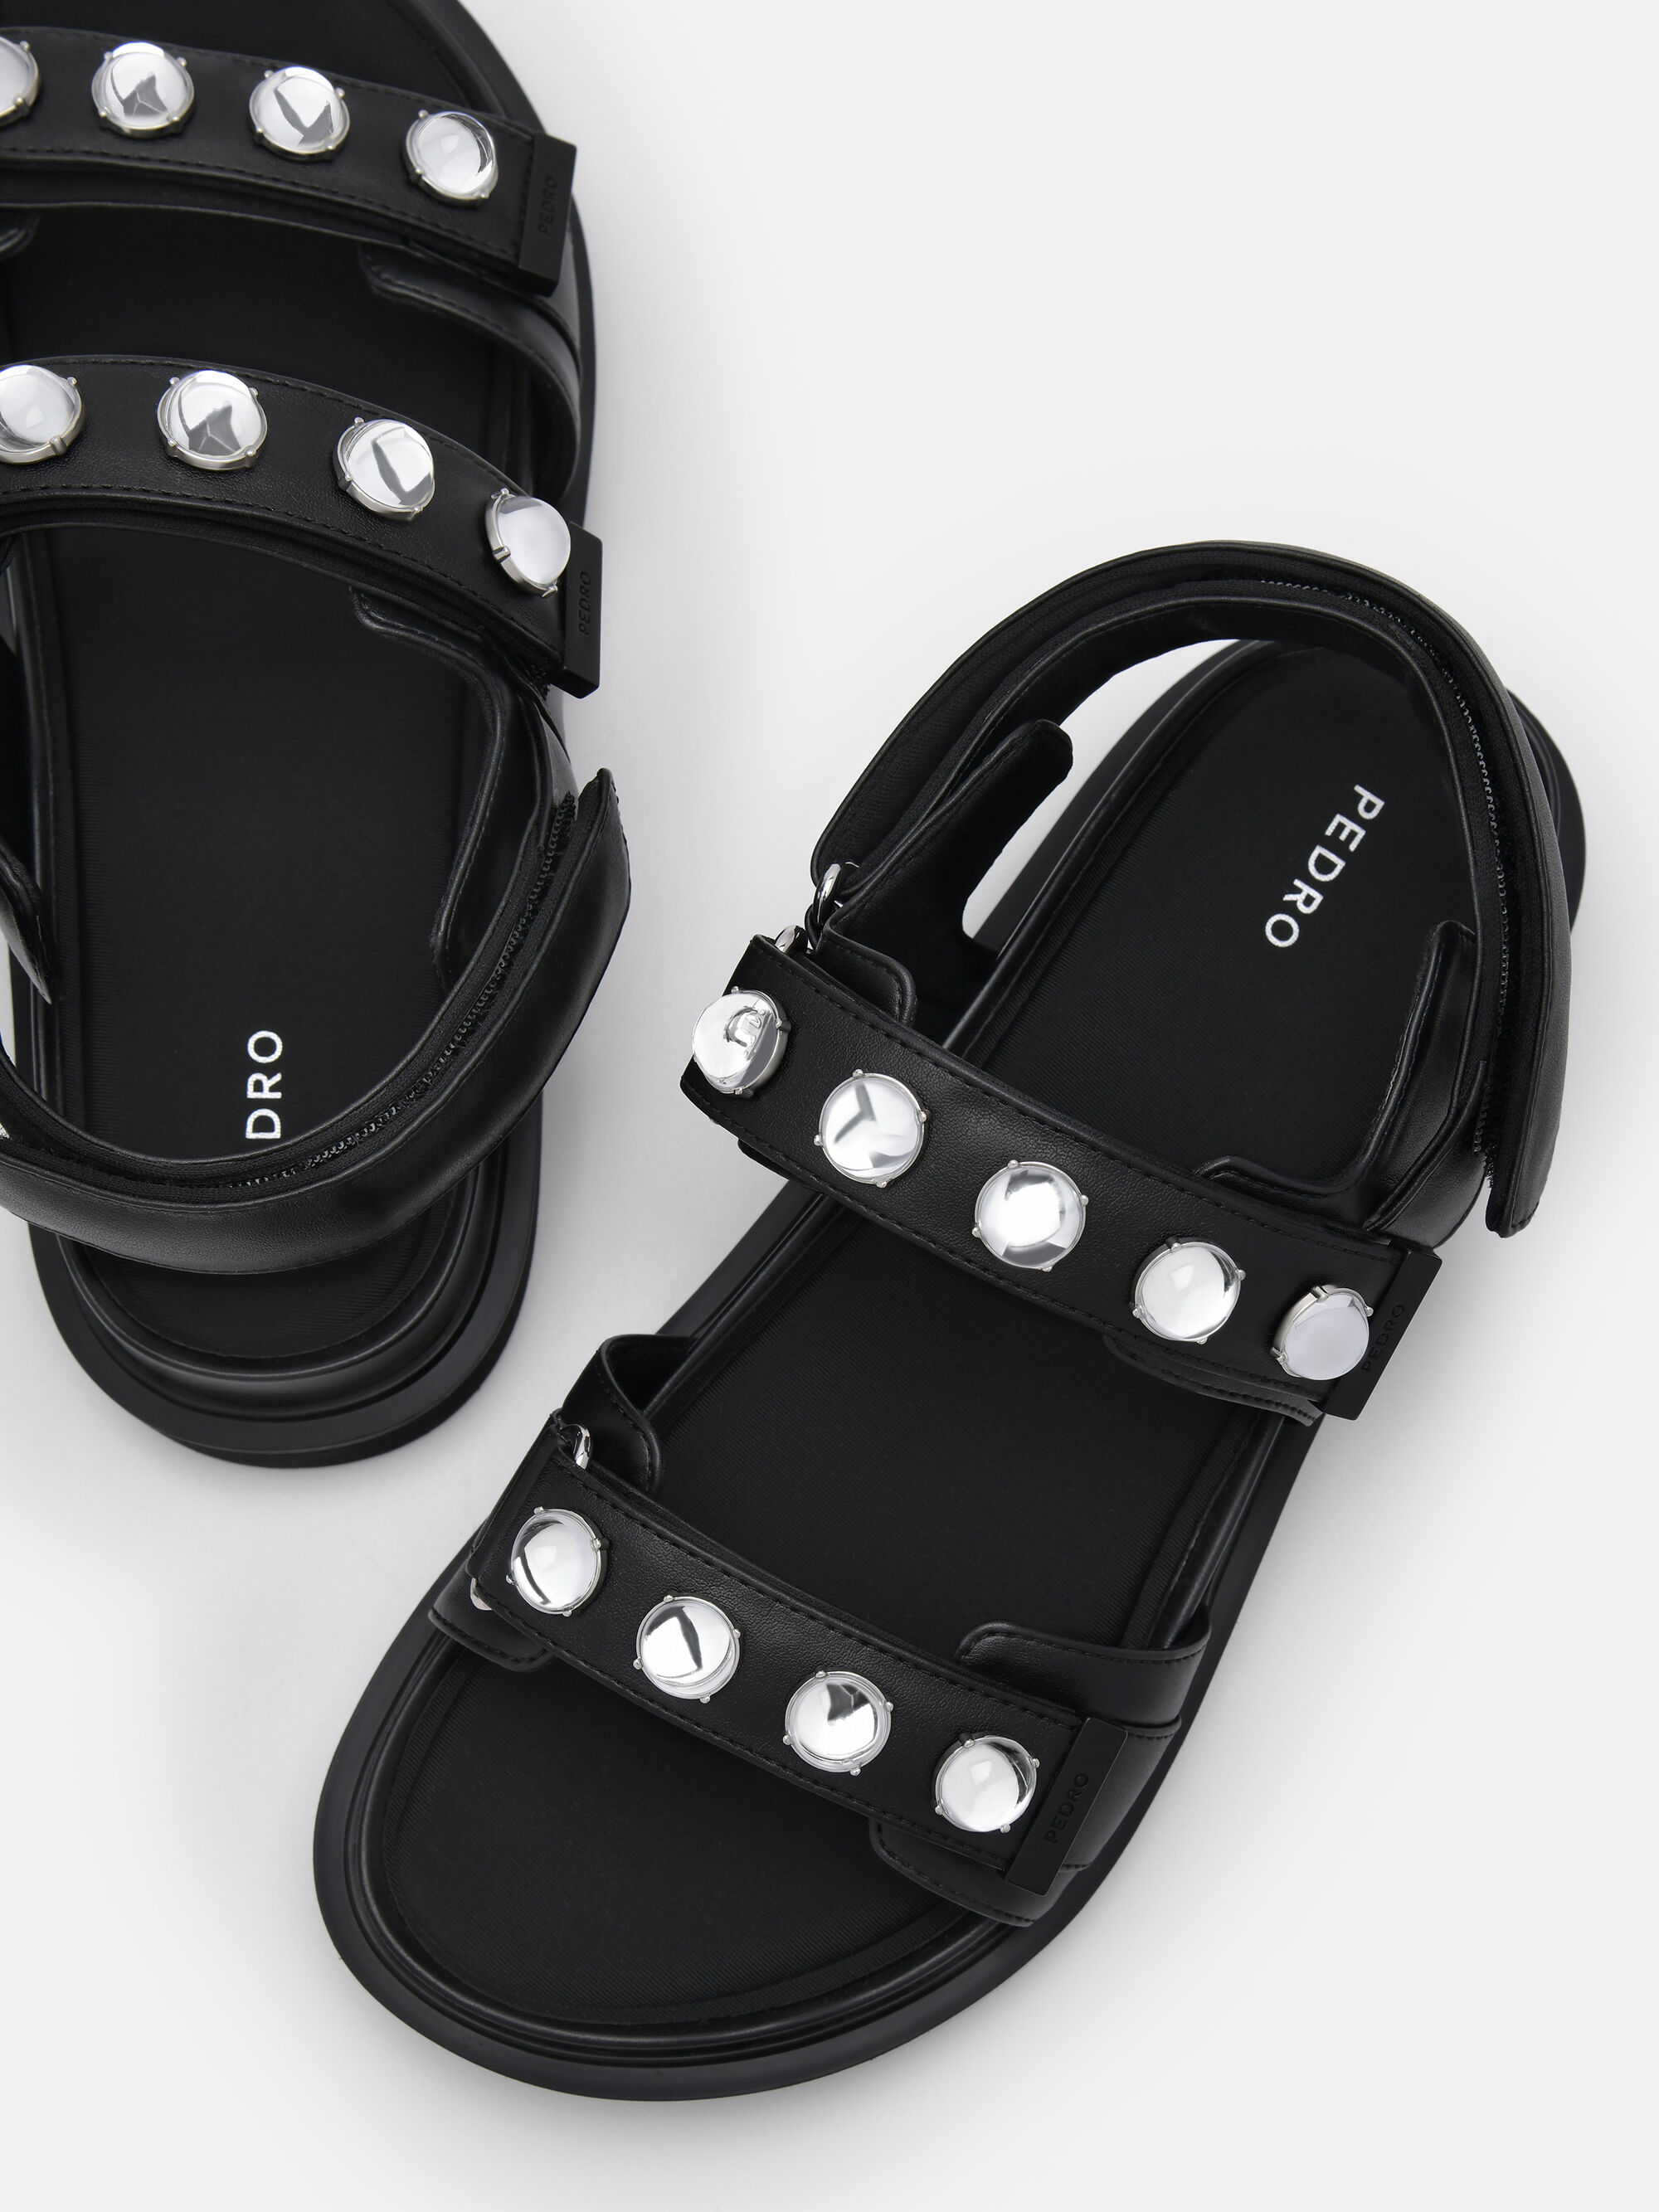 Luma Slingback Sandals, Black